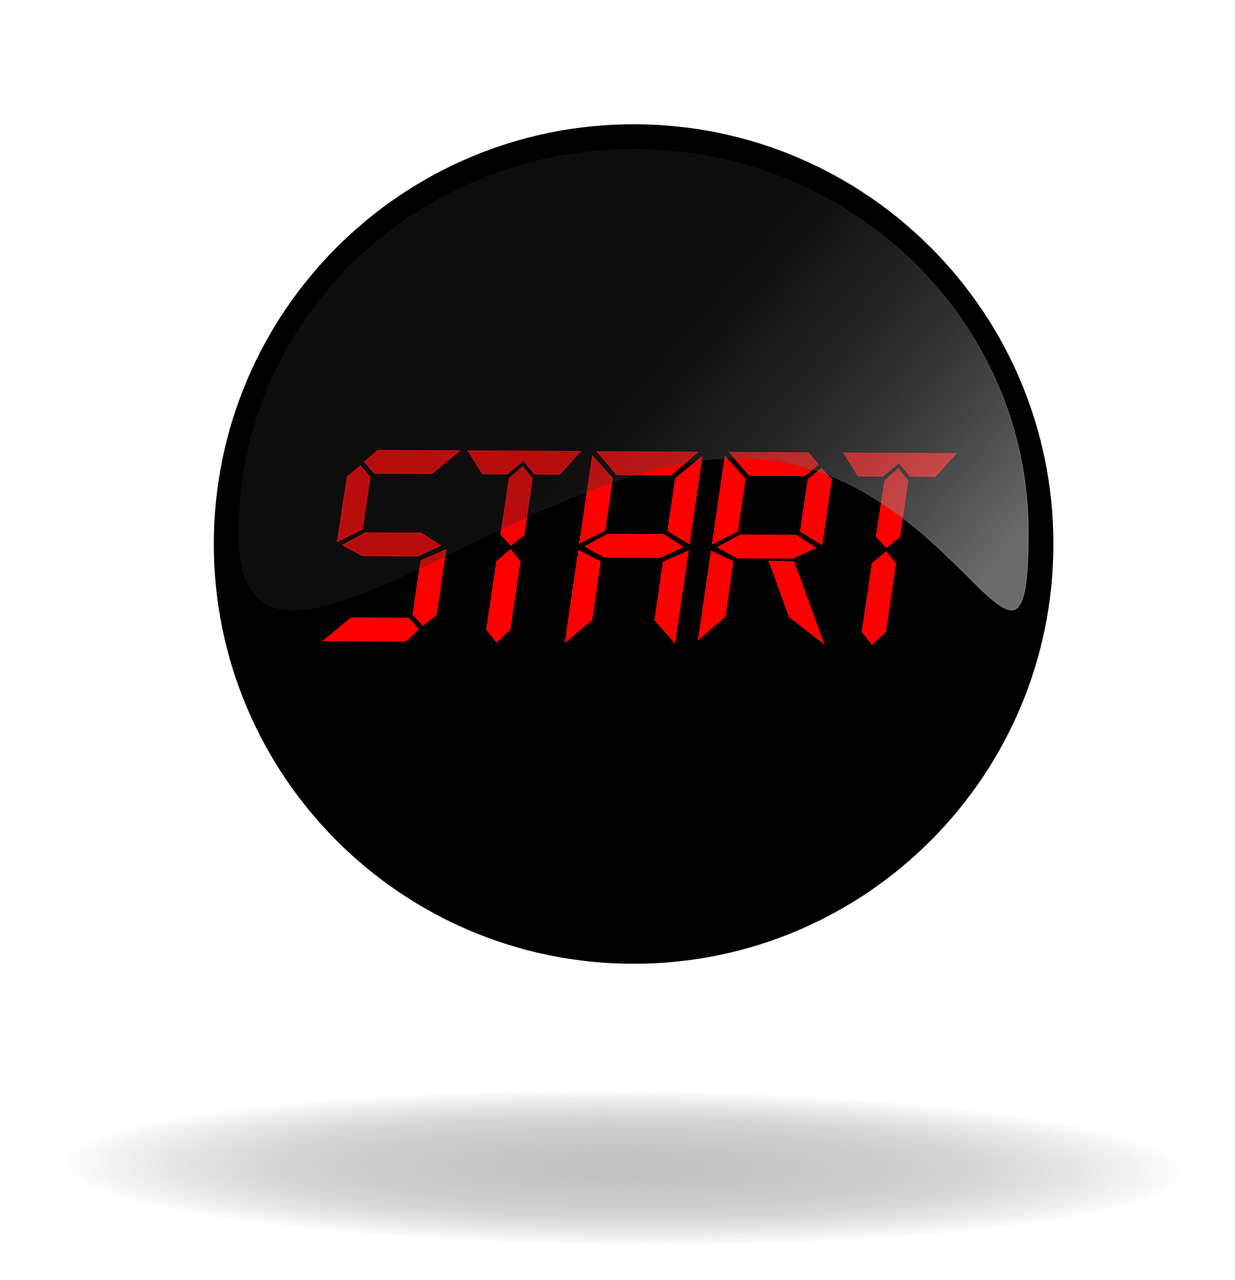 start start black button button free photo